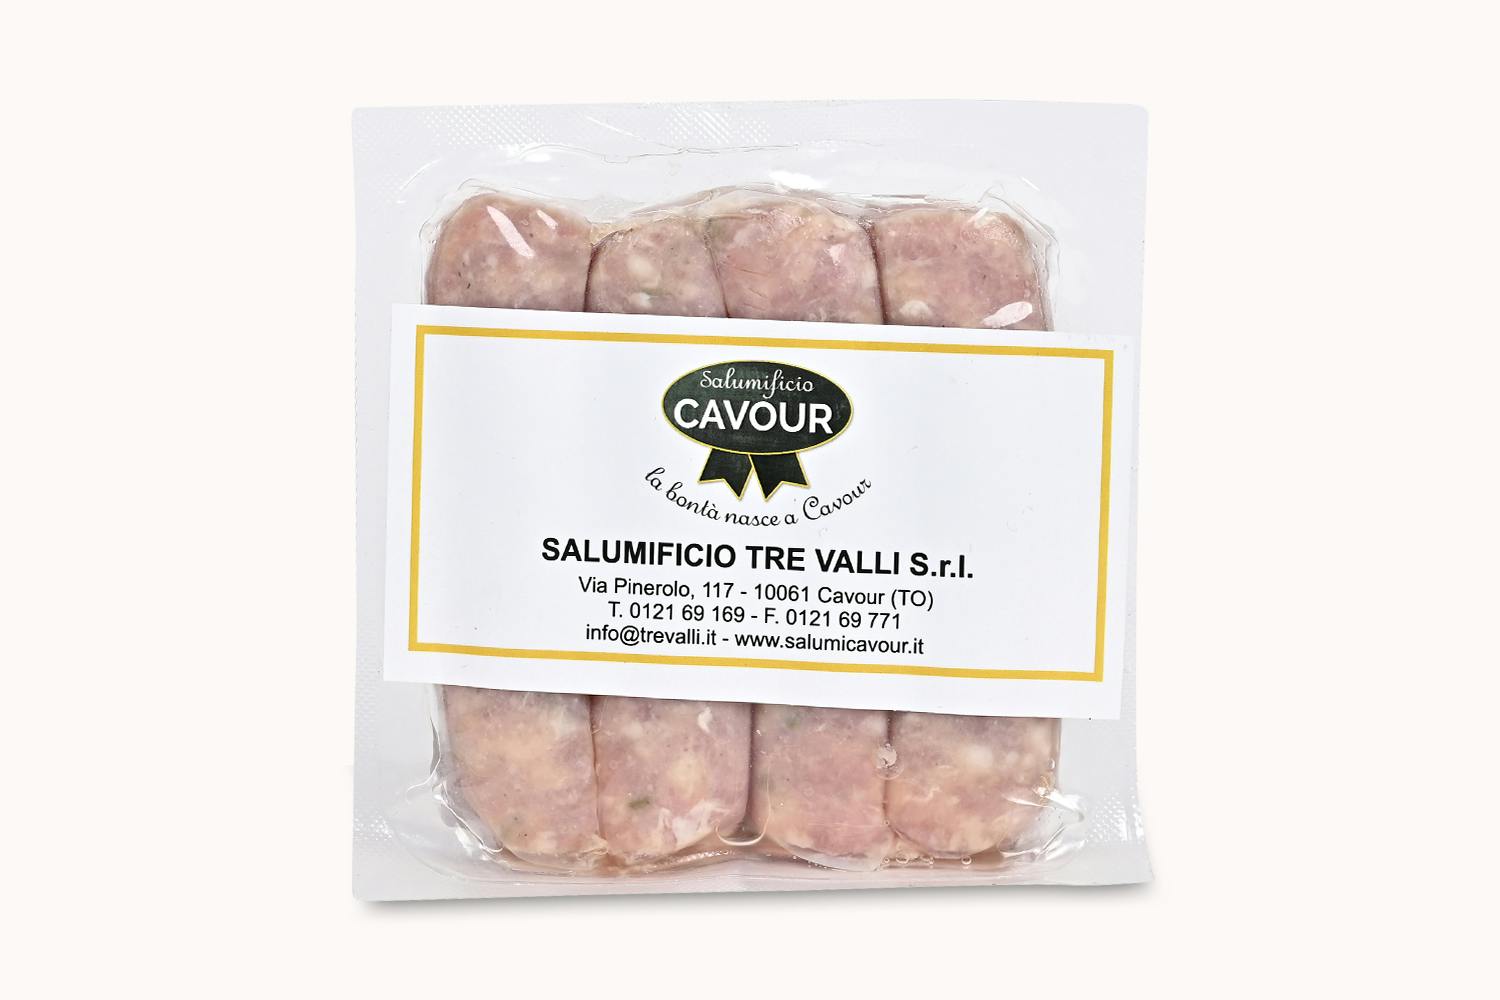 Cavour Pork Salsiccia with Fennel